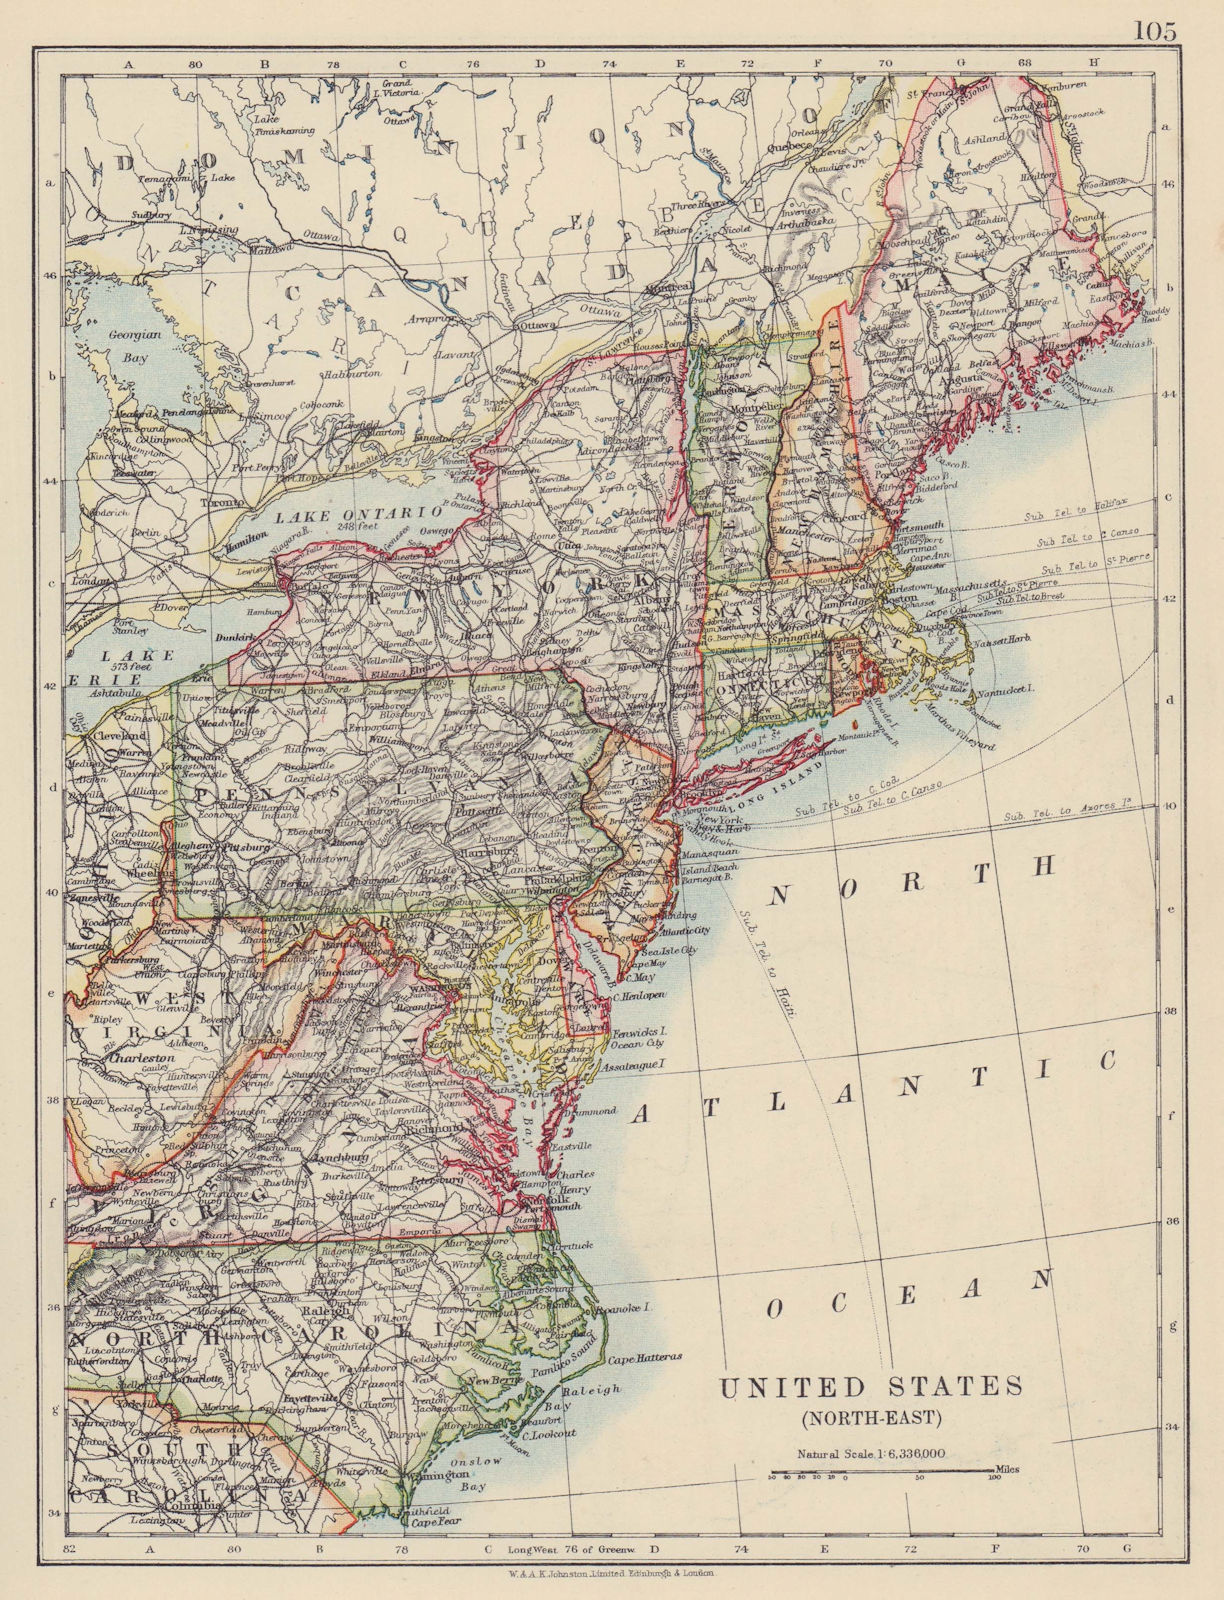 Associate Product UNITED STATES NORTH EAST. New England Appalachia Atlantic states. USA 1910 map